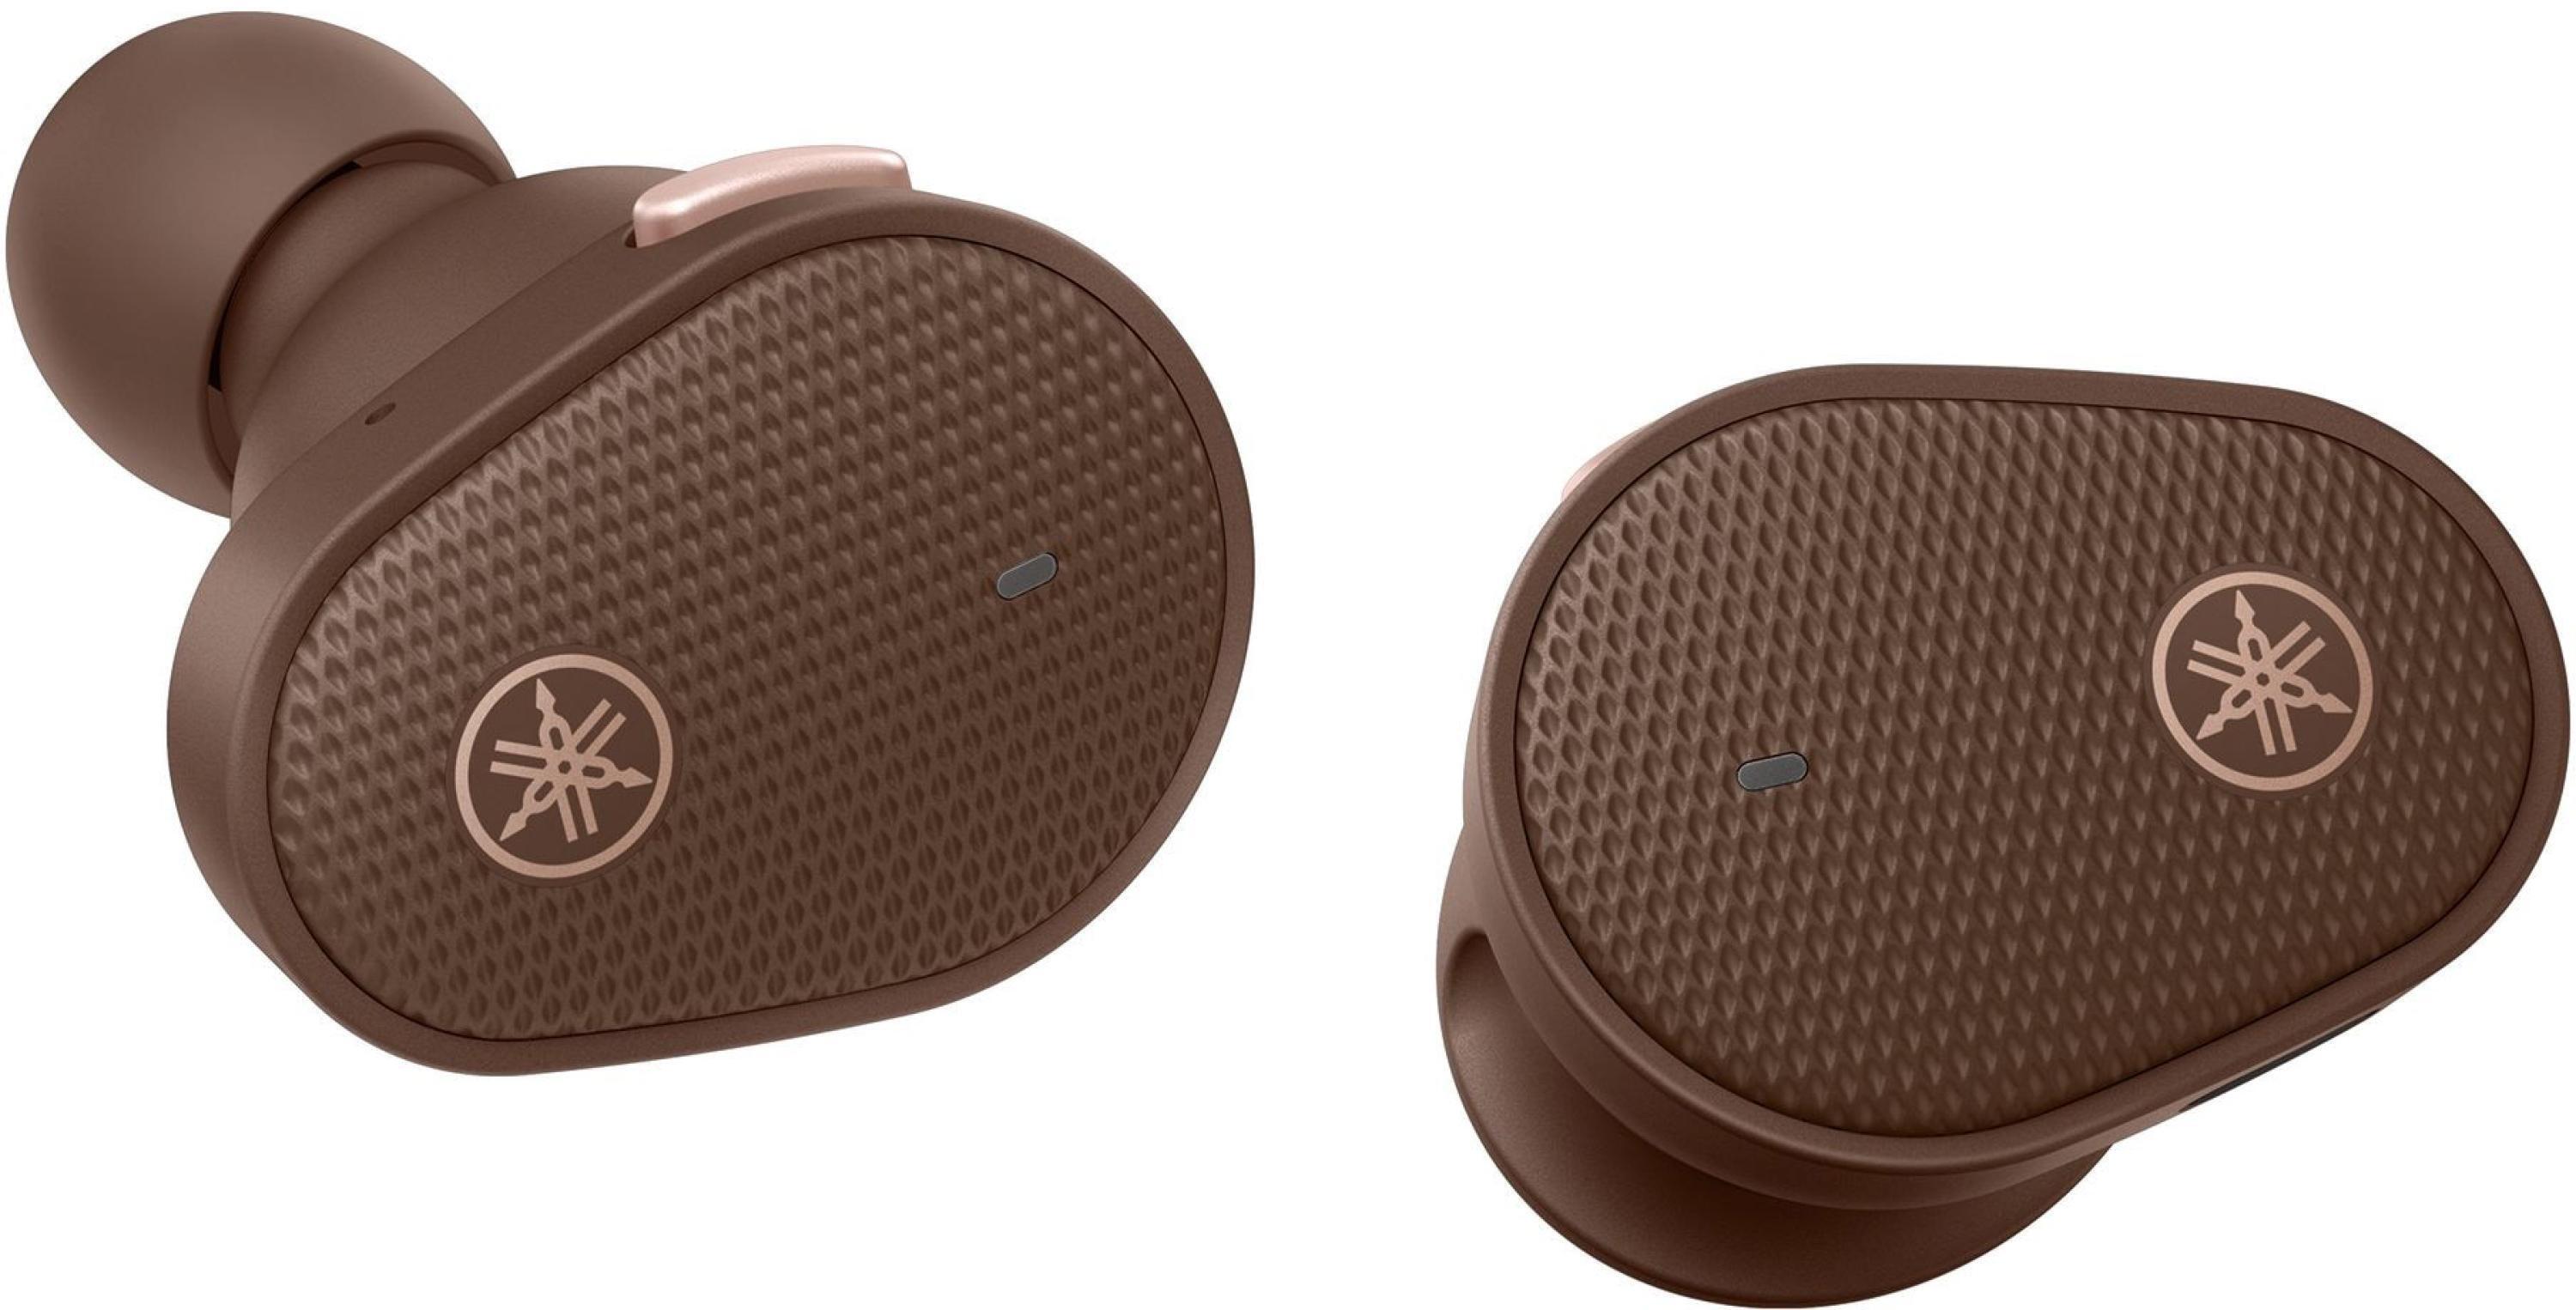 Yamaha TW-E5B True Wireless Earbuds - Brown | Sweetwater